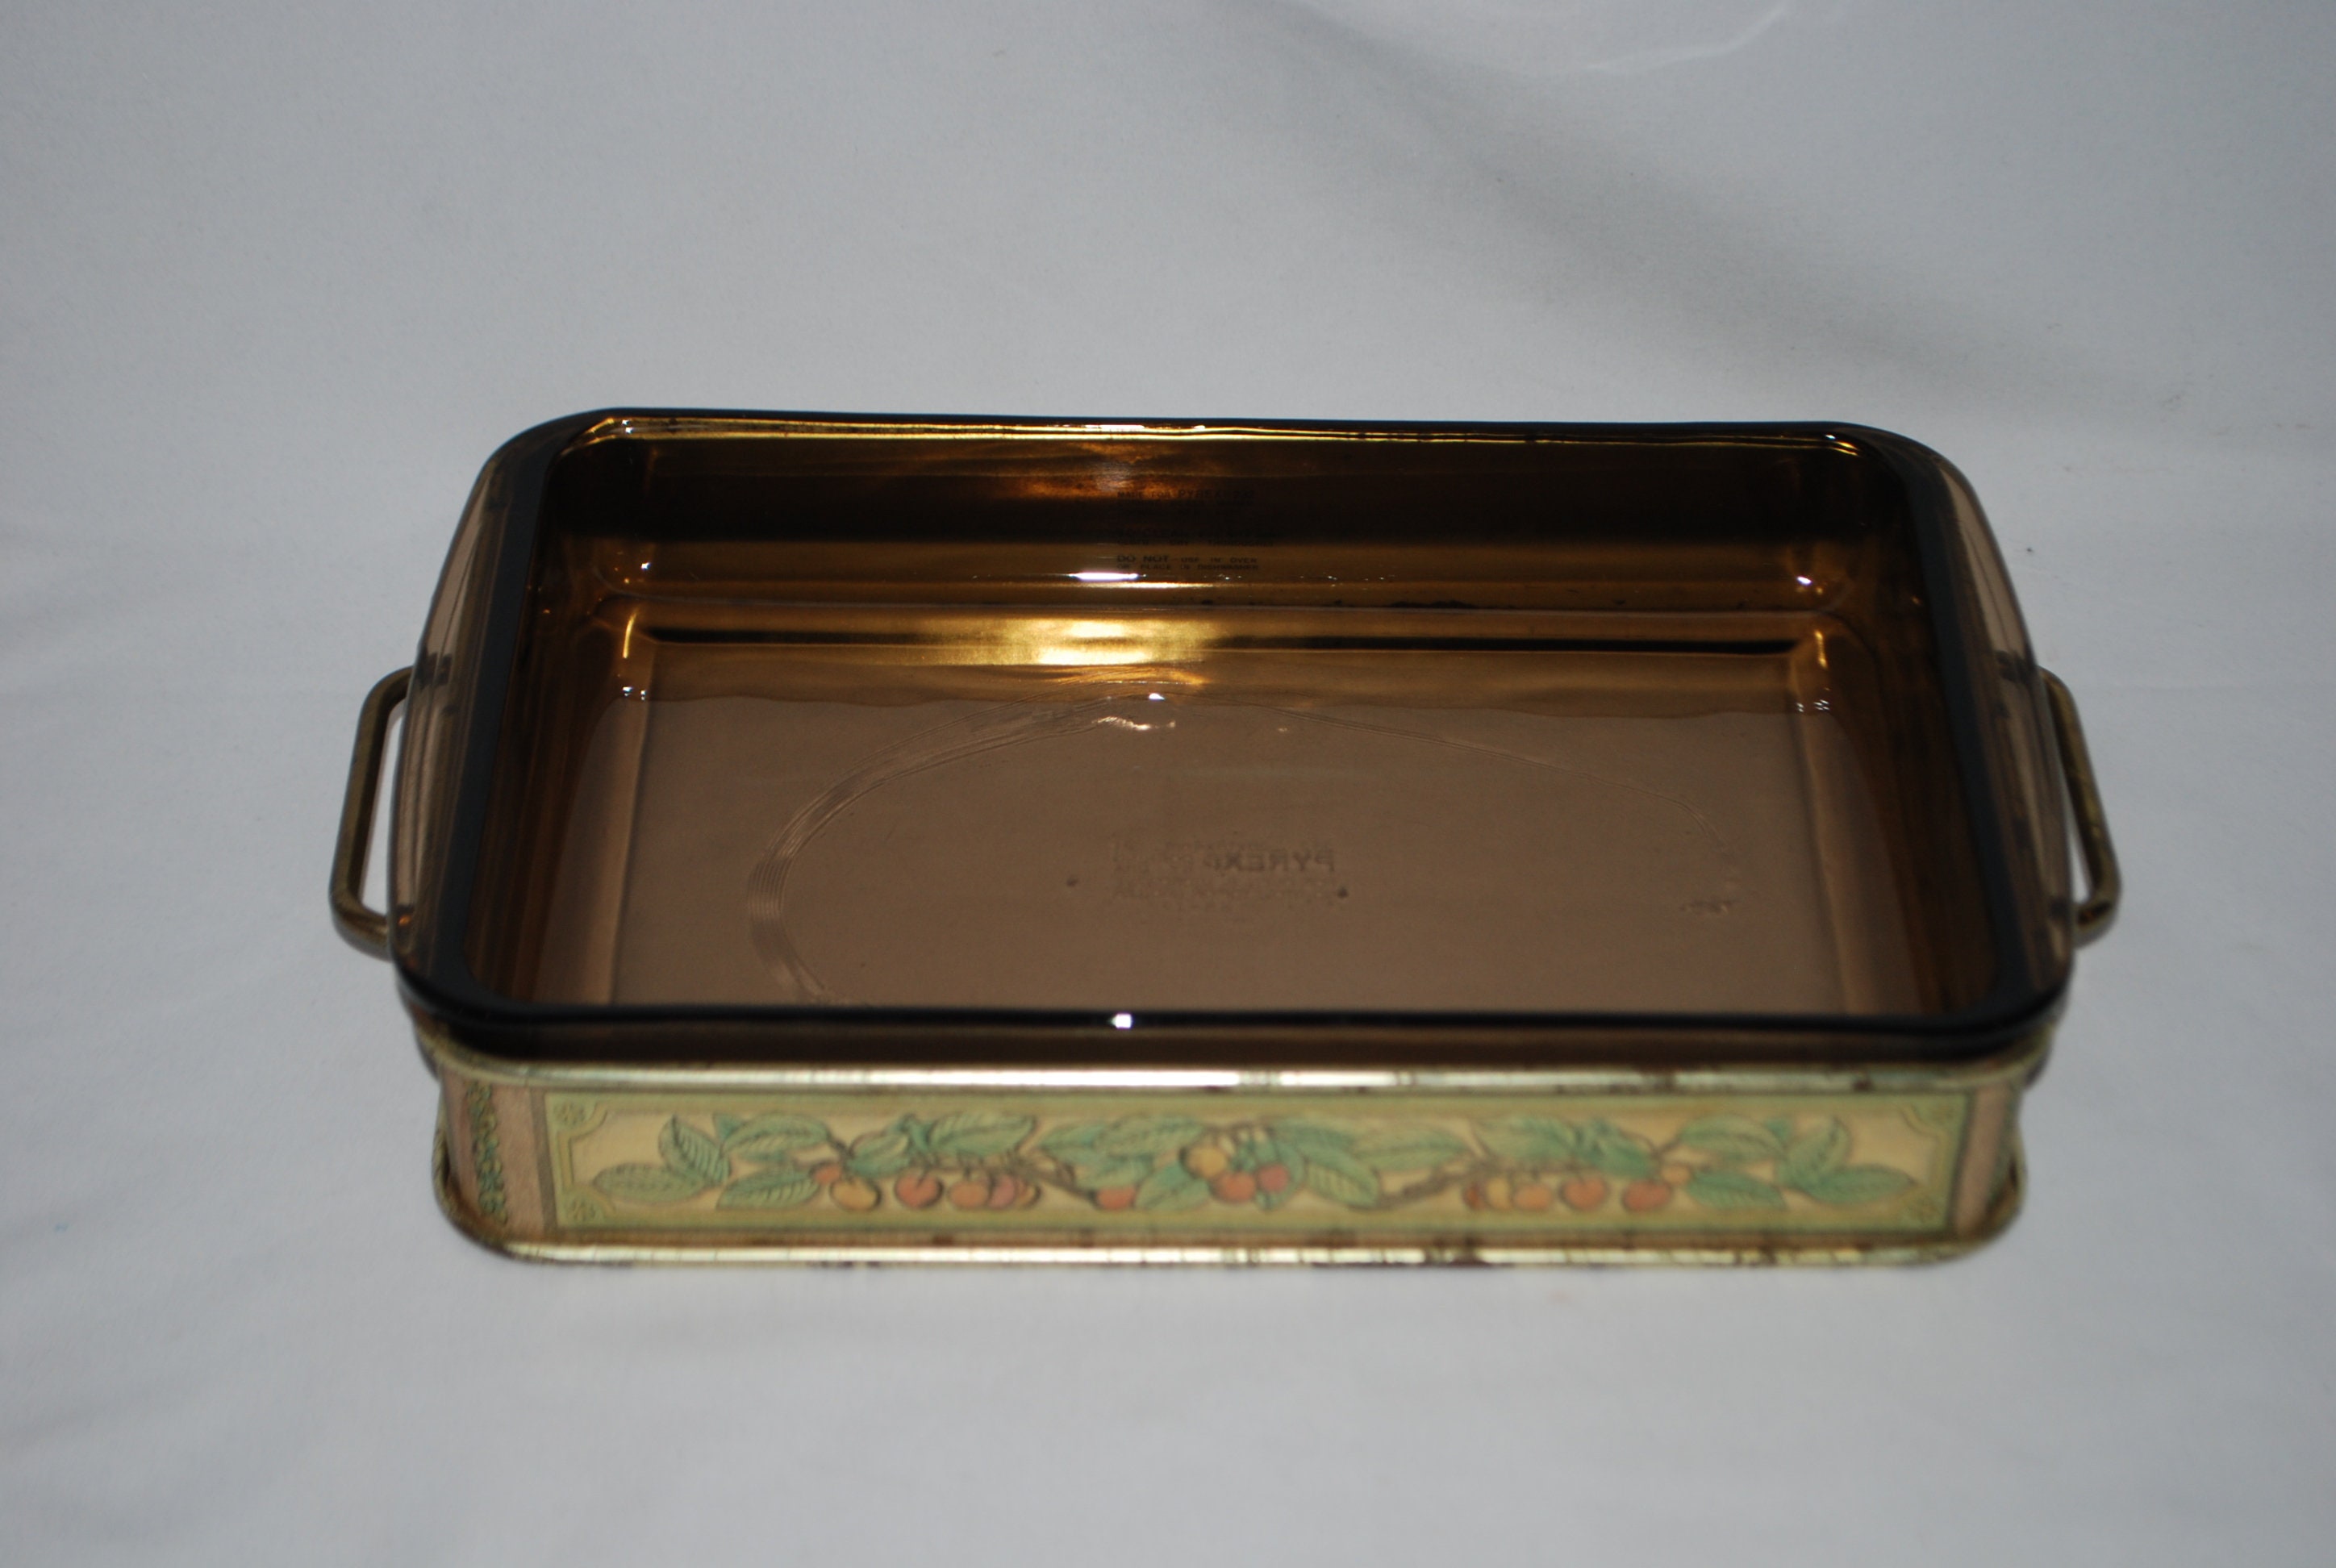 8 X 12 Vintage Fireside Amber Brown Pyrex Glass Casserole Baking Dish Pyrex  232 With Handles a Medium Size Retro Glass Cookware/ Bakeware 